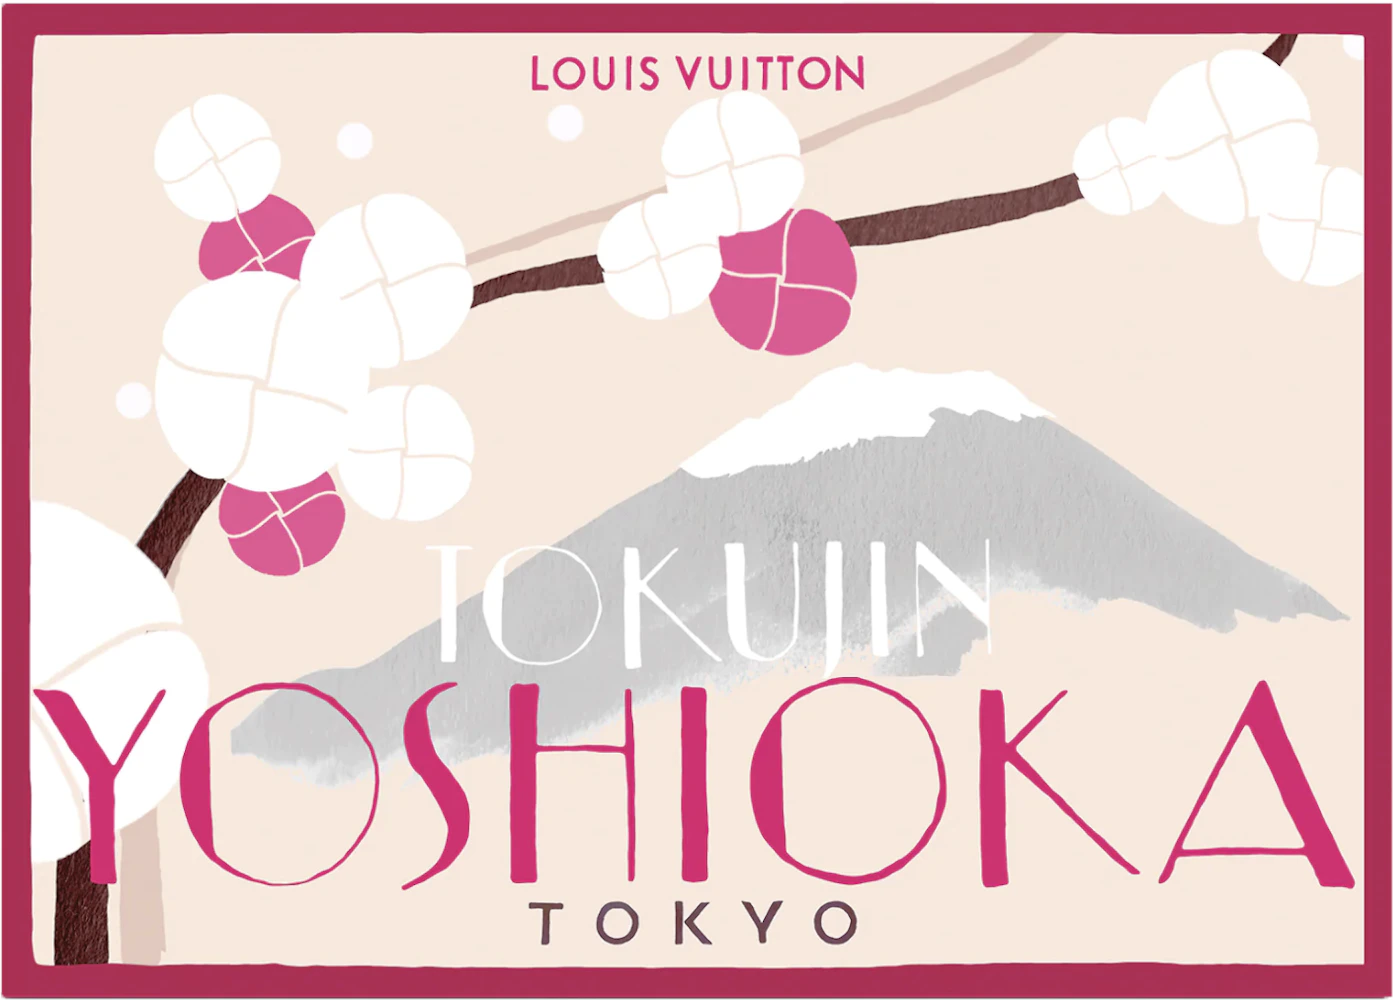 Louis Vuitton Poster Of Tokujin Yoshioka R99690 Tan/White/Pink - US